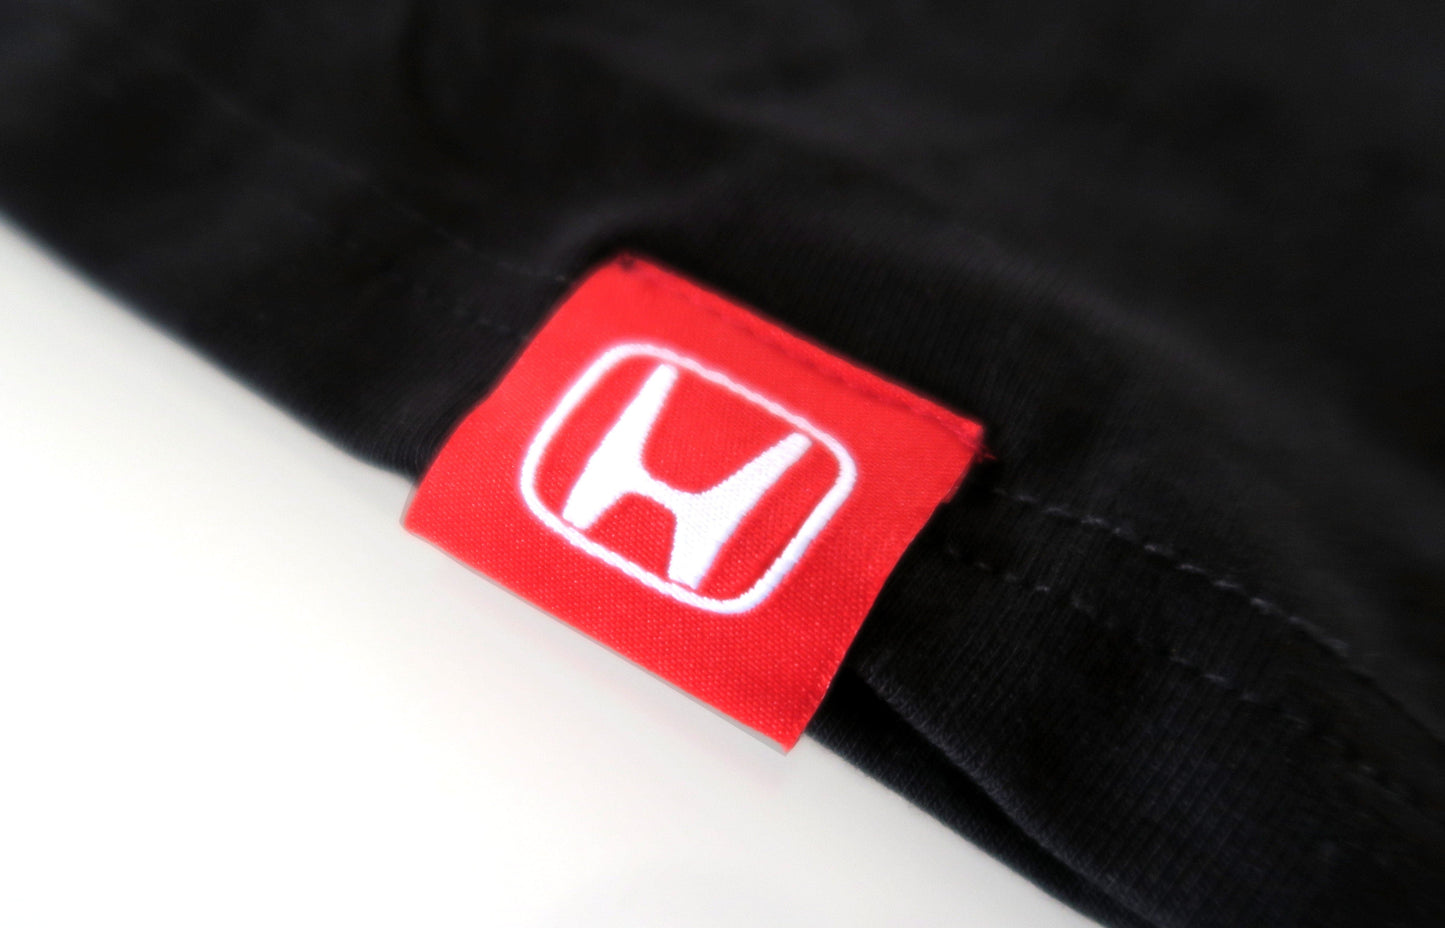 Honda Motor Co. - Made in Japan Tee